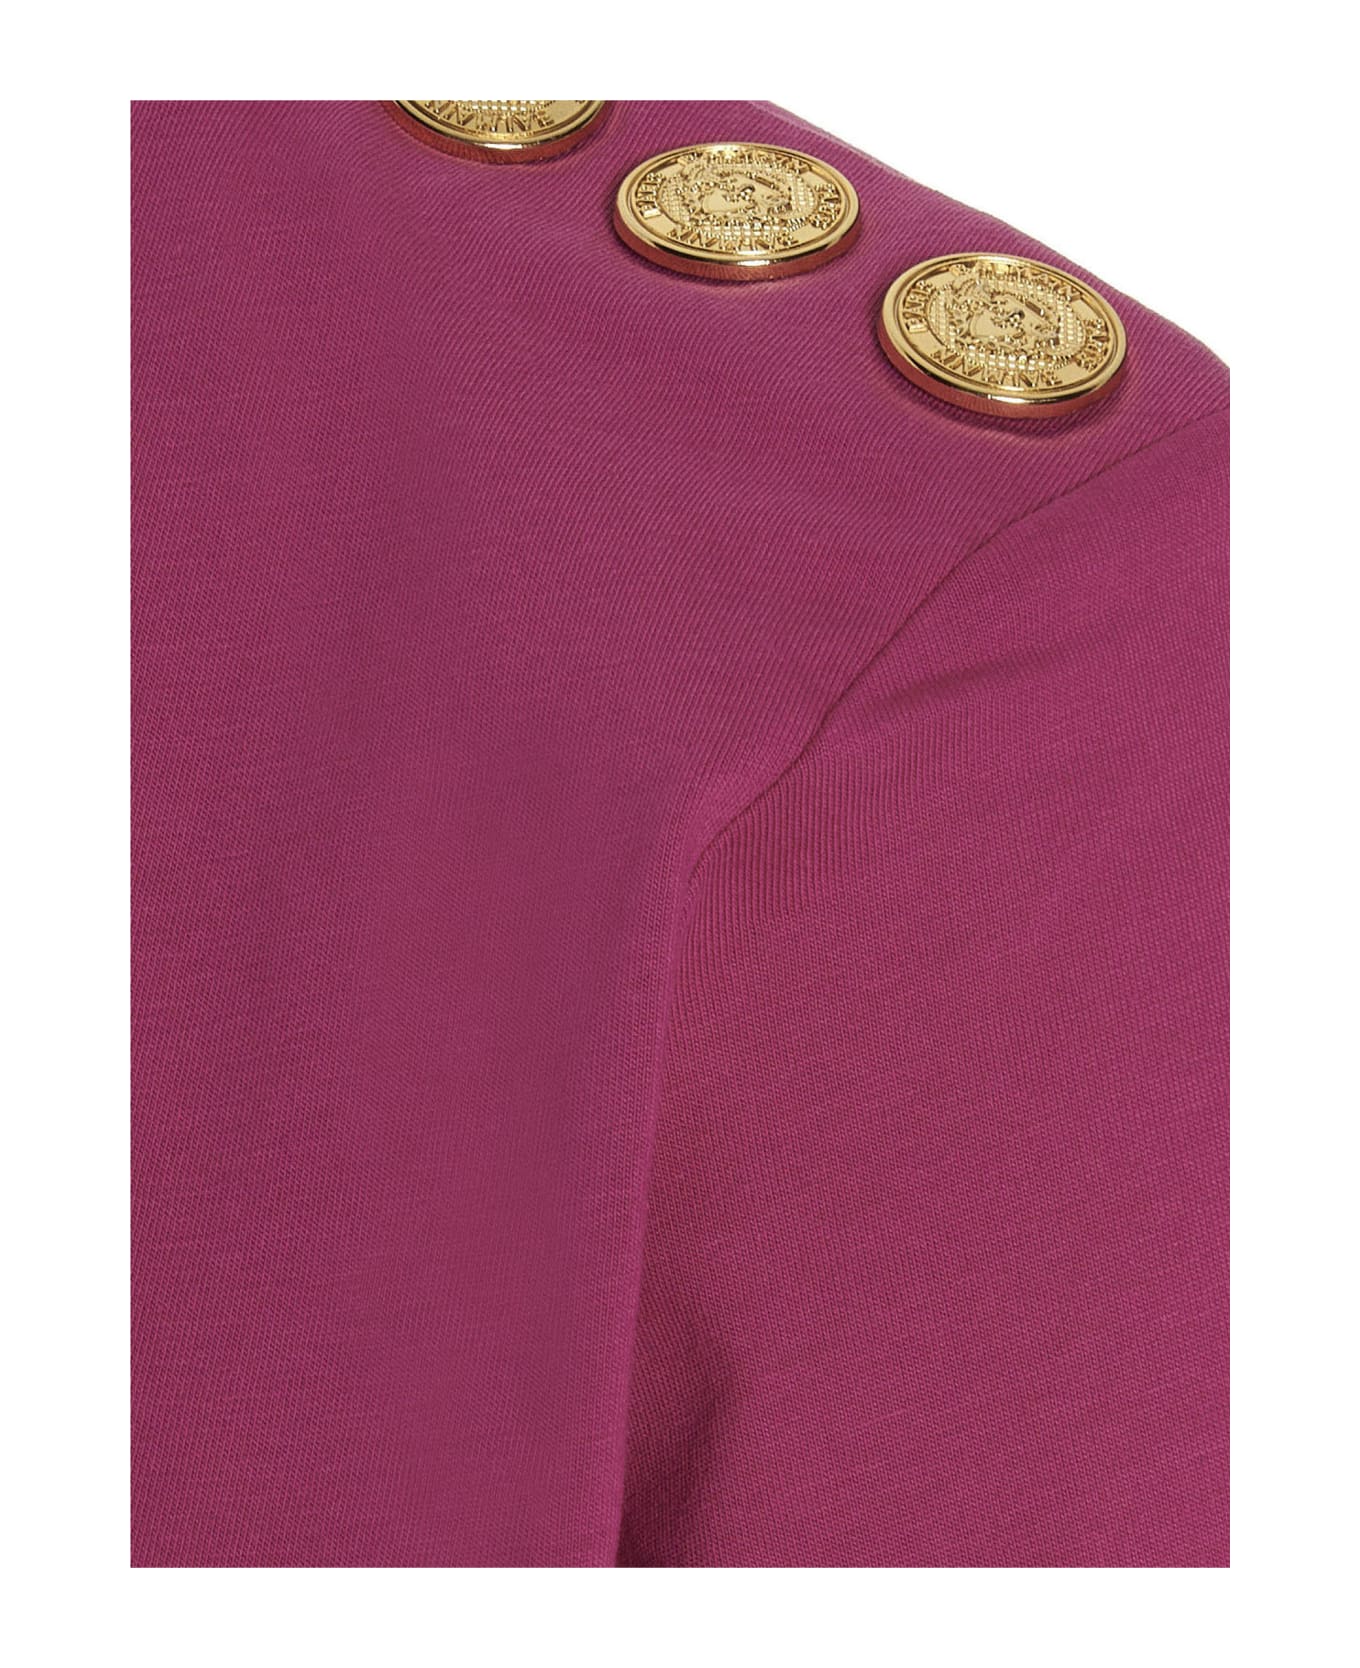 Balmain Gold Button T-shirt - Fuchsia